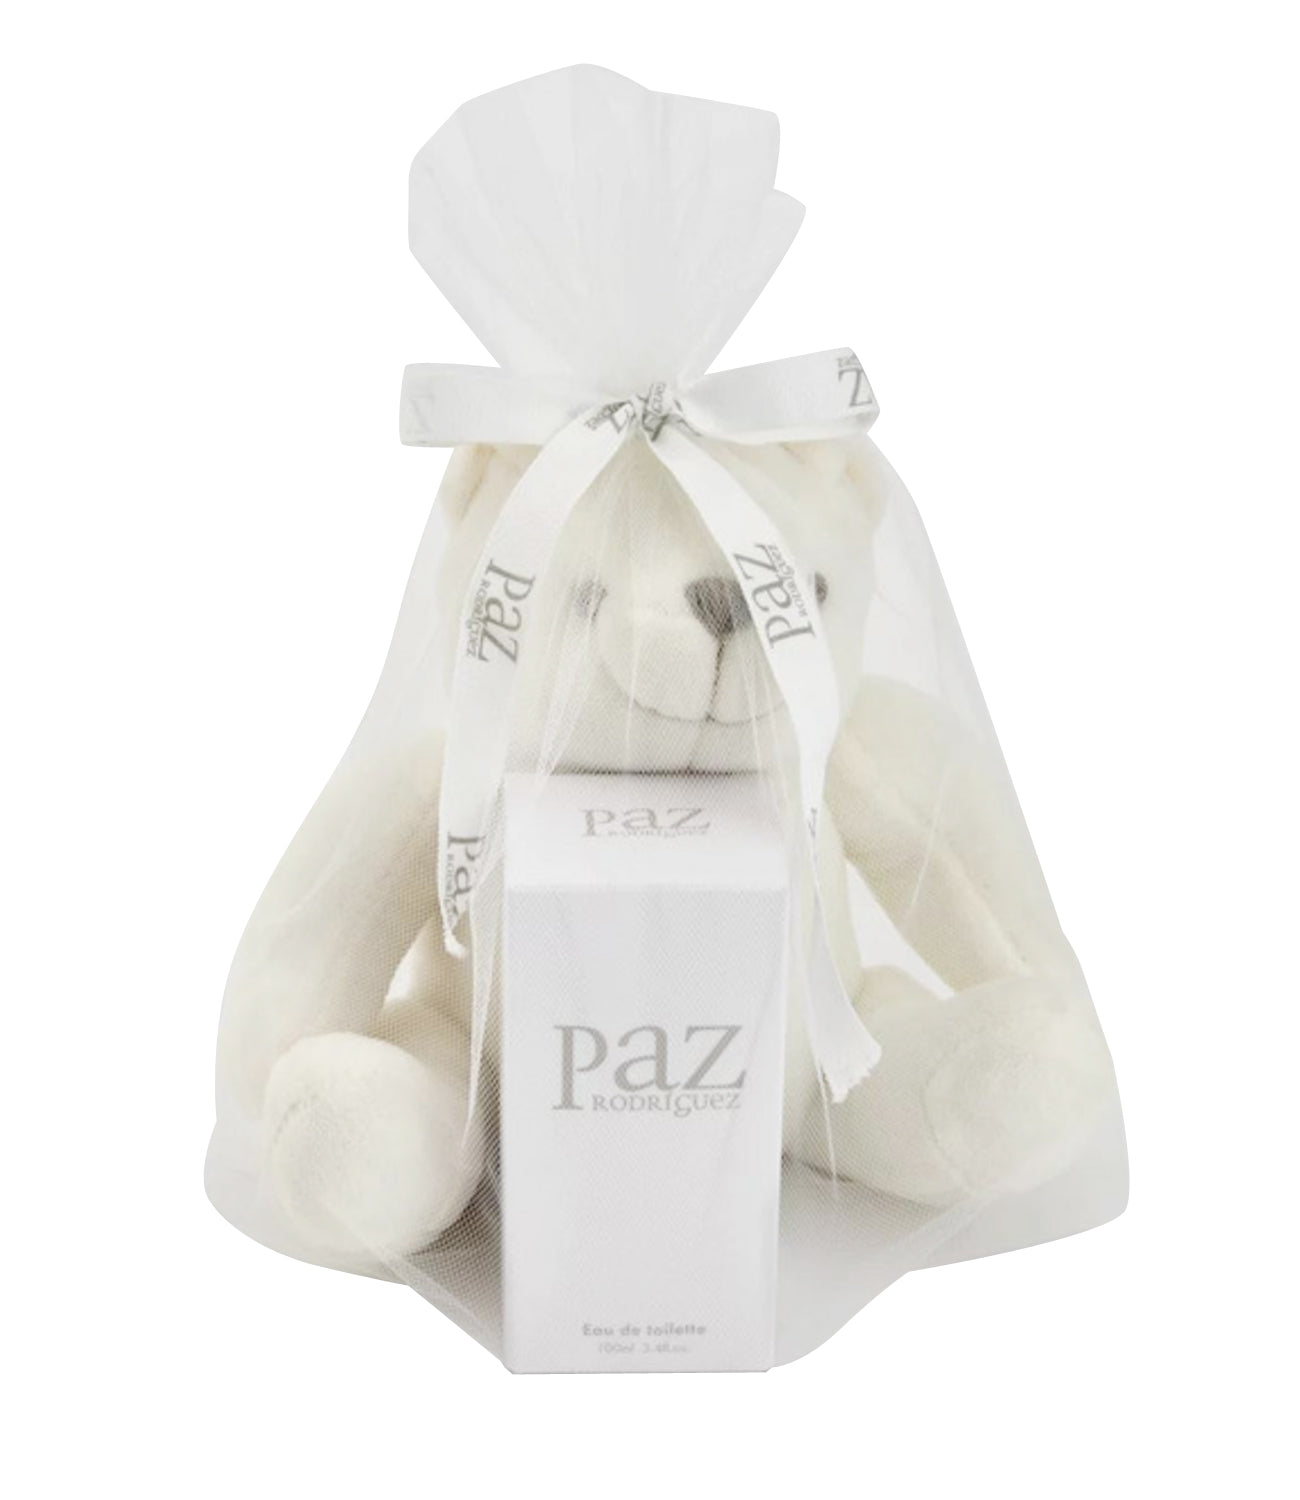 Paz Rodriguez | Perfume and Plush Cream